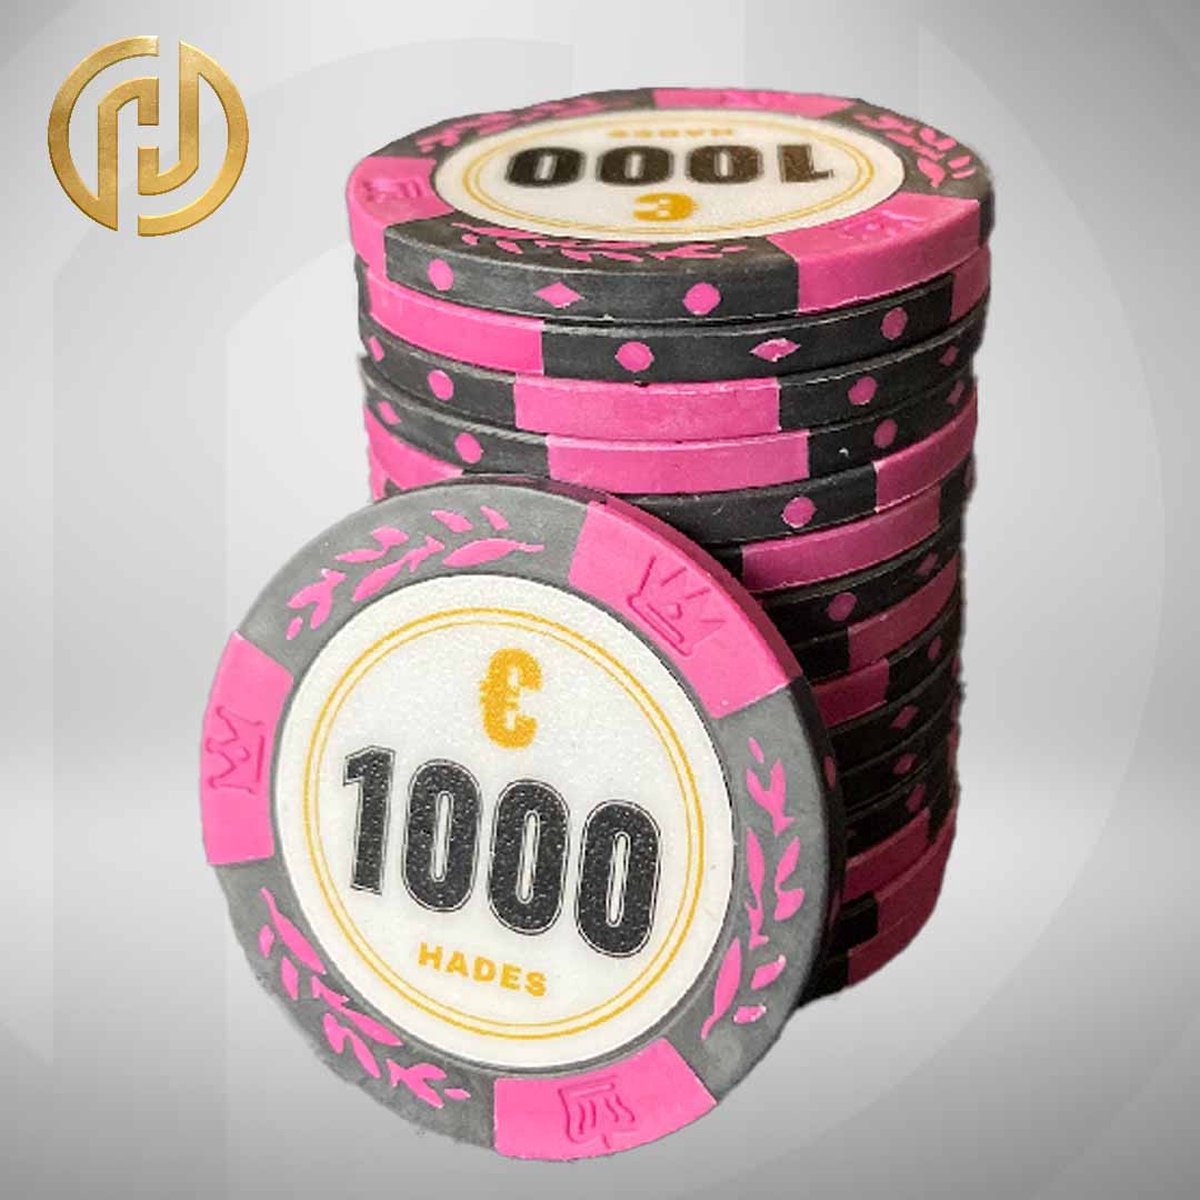 Mec Hades Cashgame Classic Poker Chips €1.000 donkerroze (25 stuks) pokerchips pokerfiches poker fiches clay chips pokerspel pokerset poker set